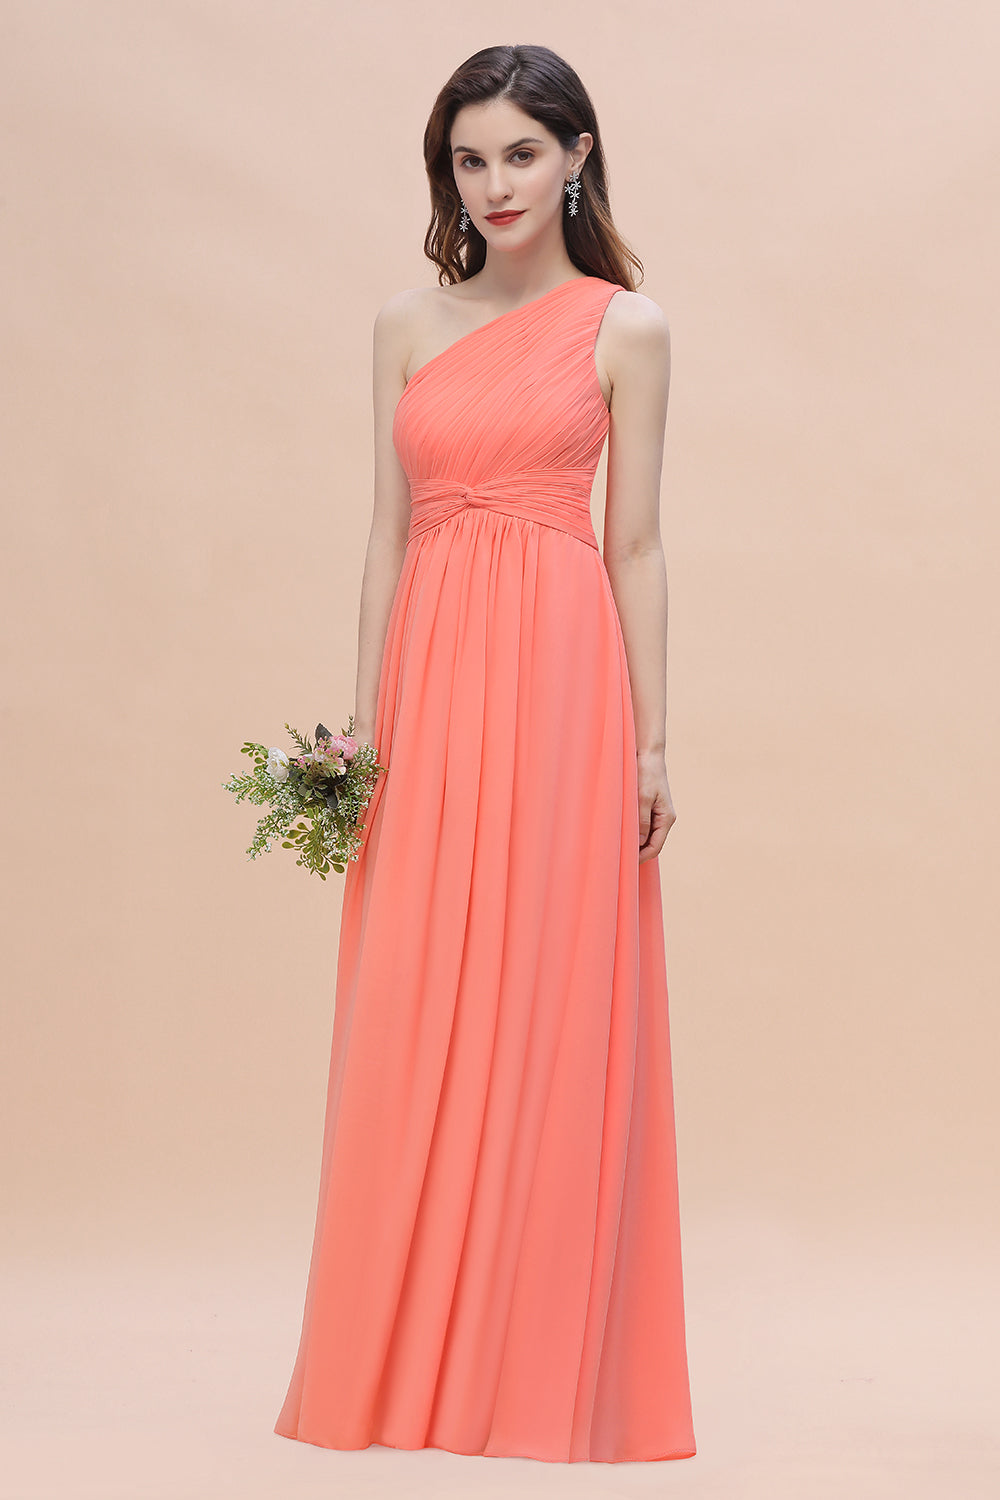 Load image into Gallery viewer, A-Line One Shoulder Chiffon Bridesmaid Dress Pretty Long Wedding Guest Dress-BIZTUNNEL
